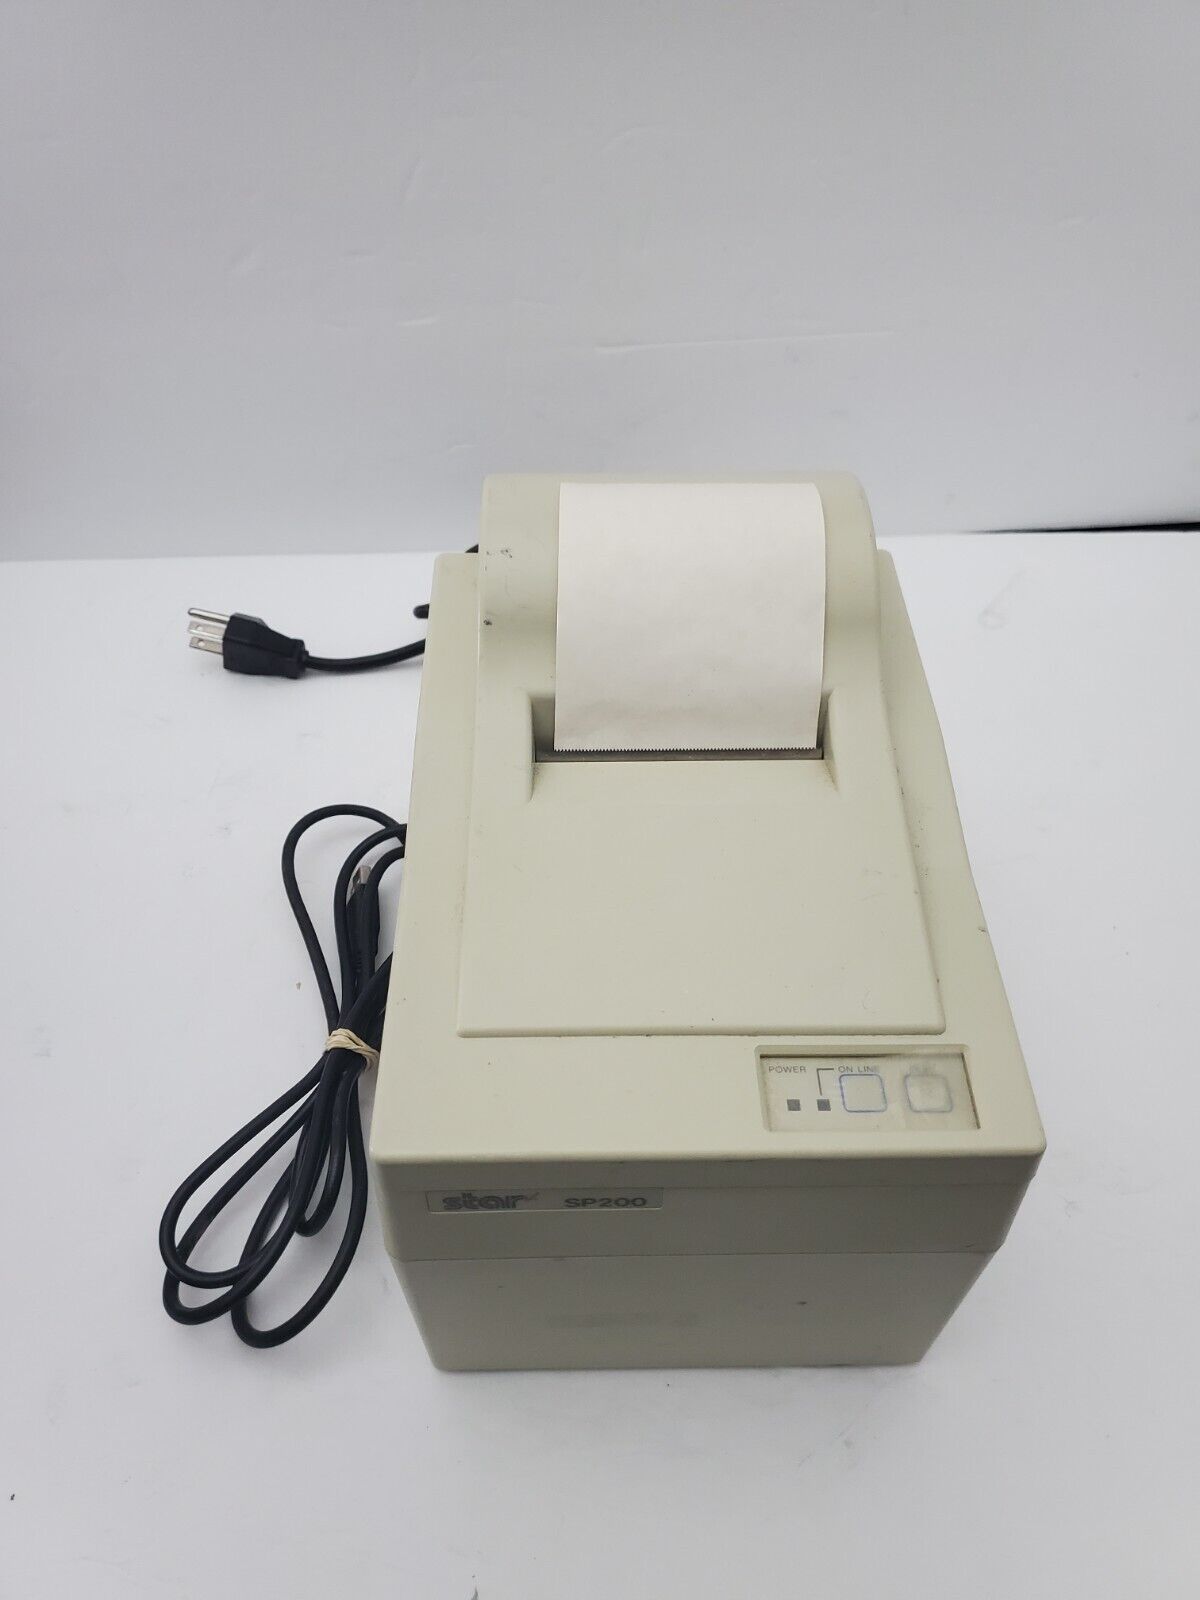 Star Micronics,  SP200-2 Receipt Printer, Point of Sale Dot Matrix Printer Works